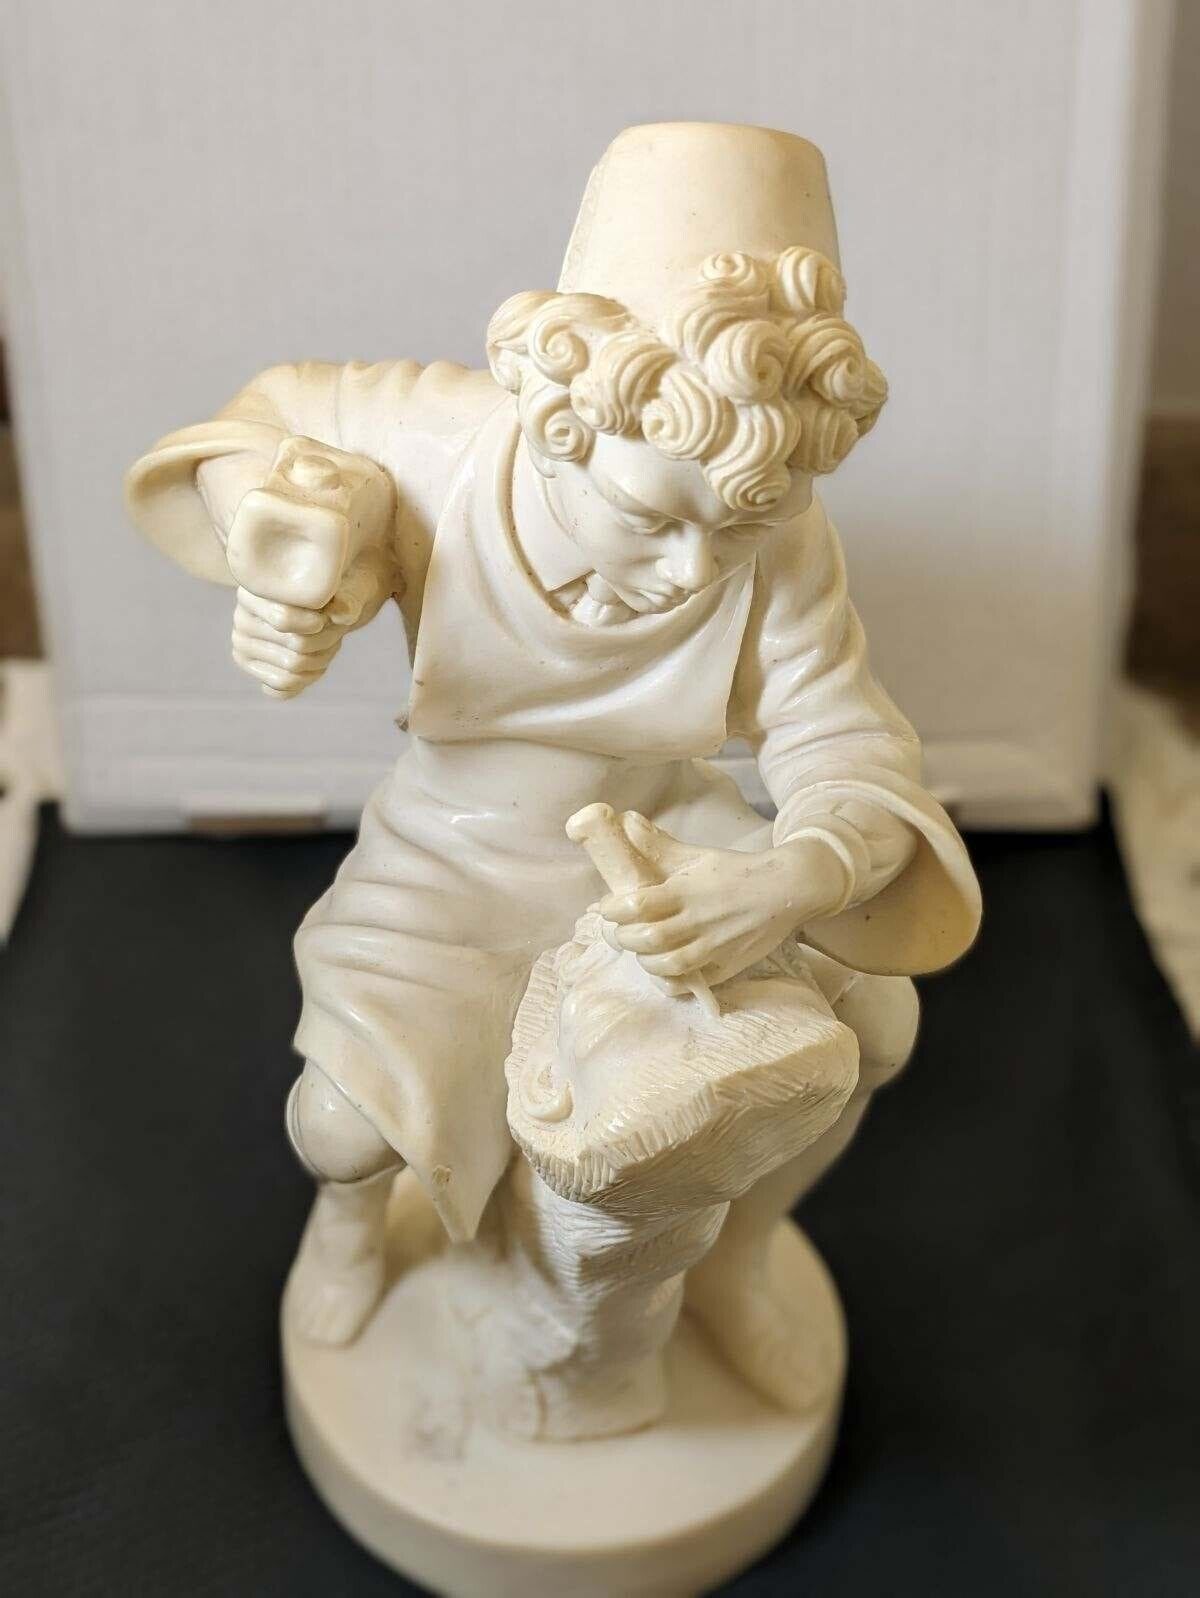 Vtg. Italian made figurine sculptor boy, white resin/composition?